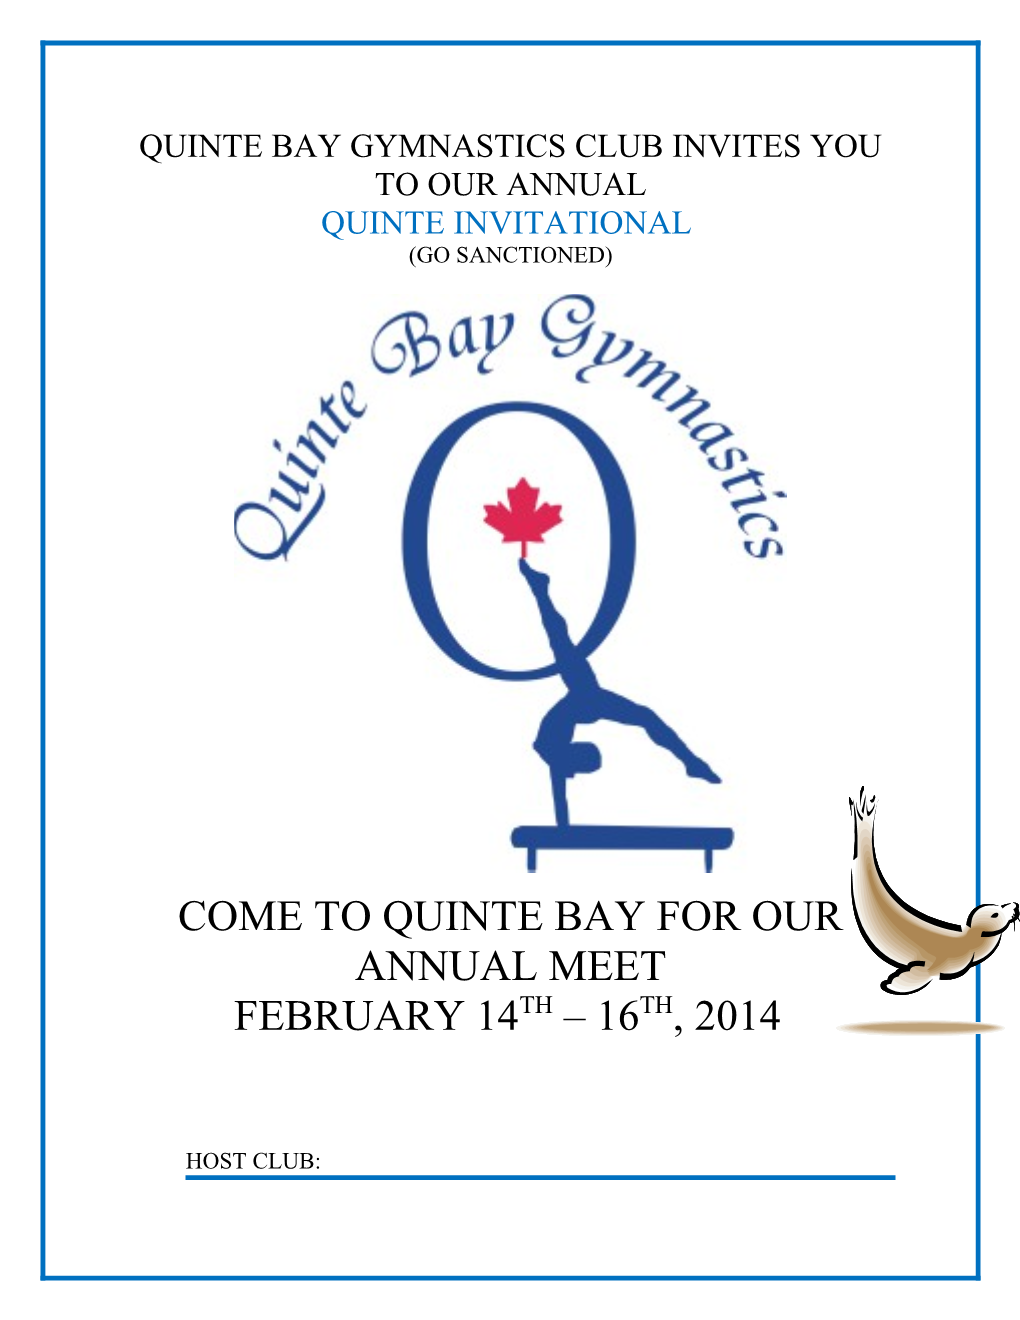 Quinte Bay Gymnastics Club Invites You to Our Annual